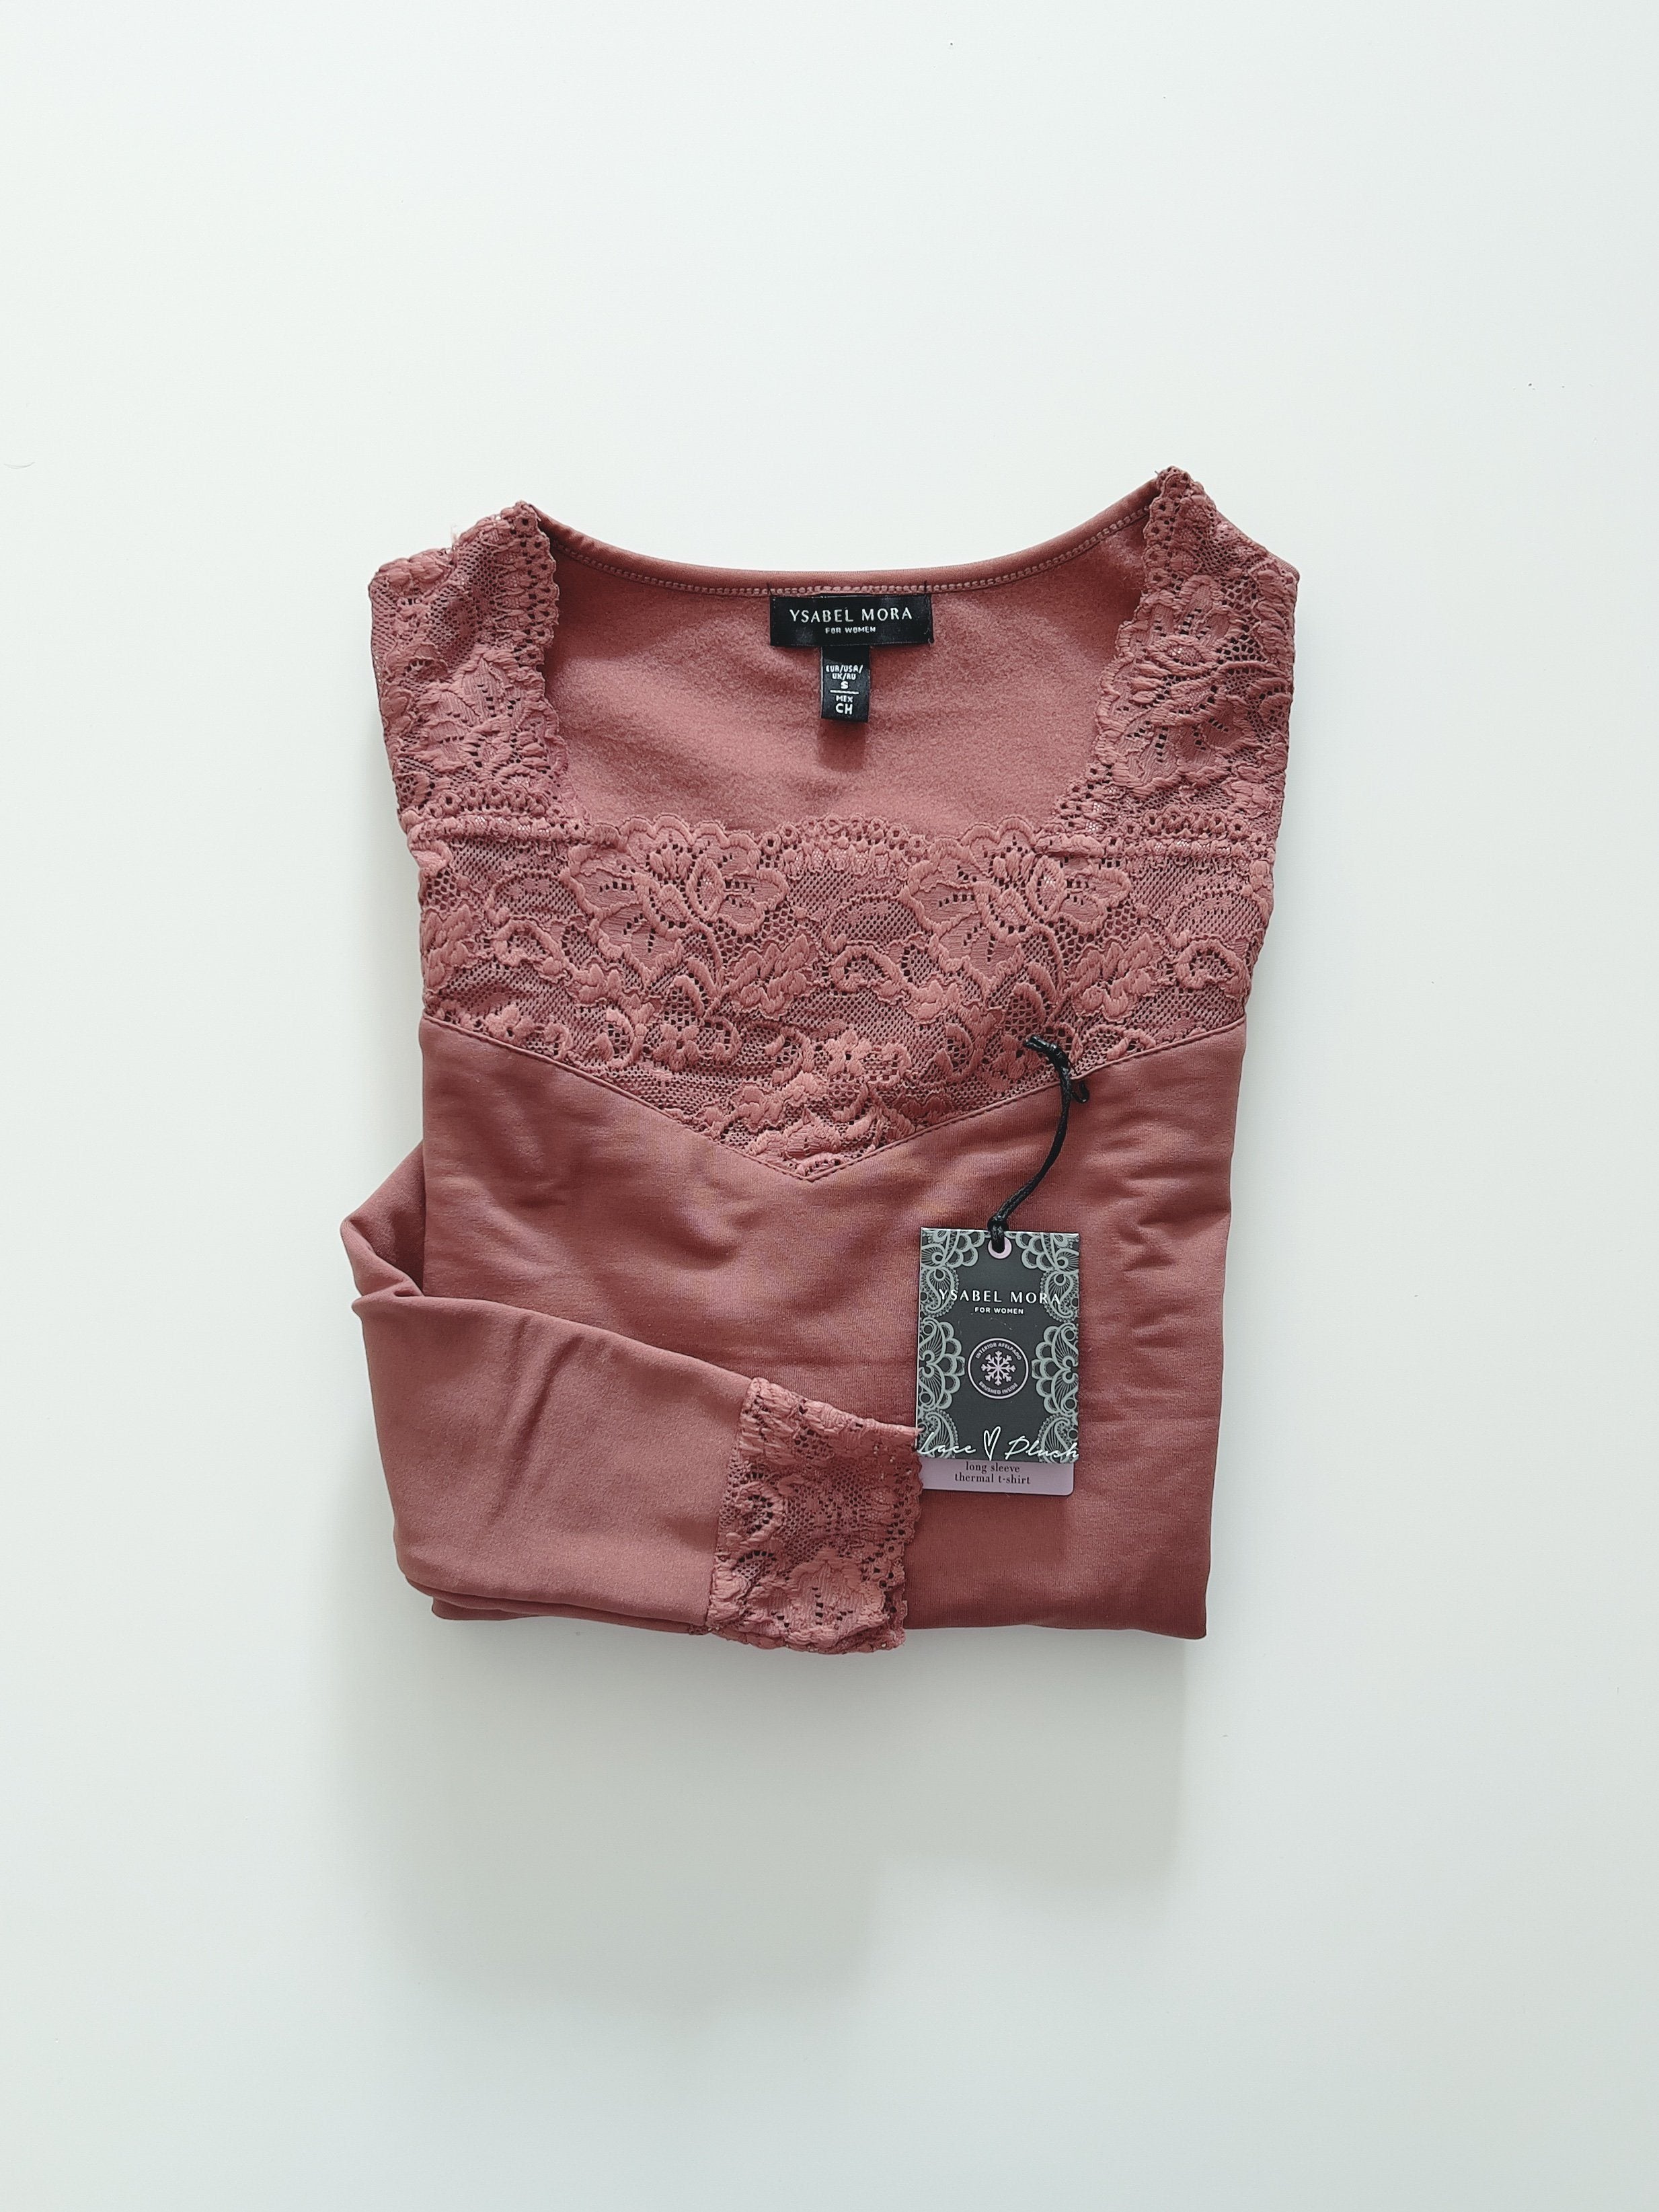 Ysabel Mora Camiseta Térmica mujer encaje talla M 70005 color Marfil -  Mercería Noiva